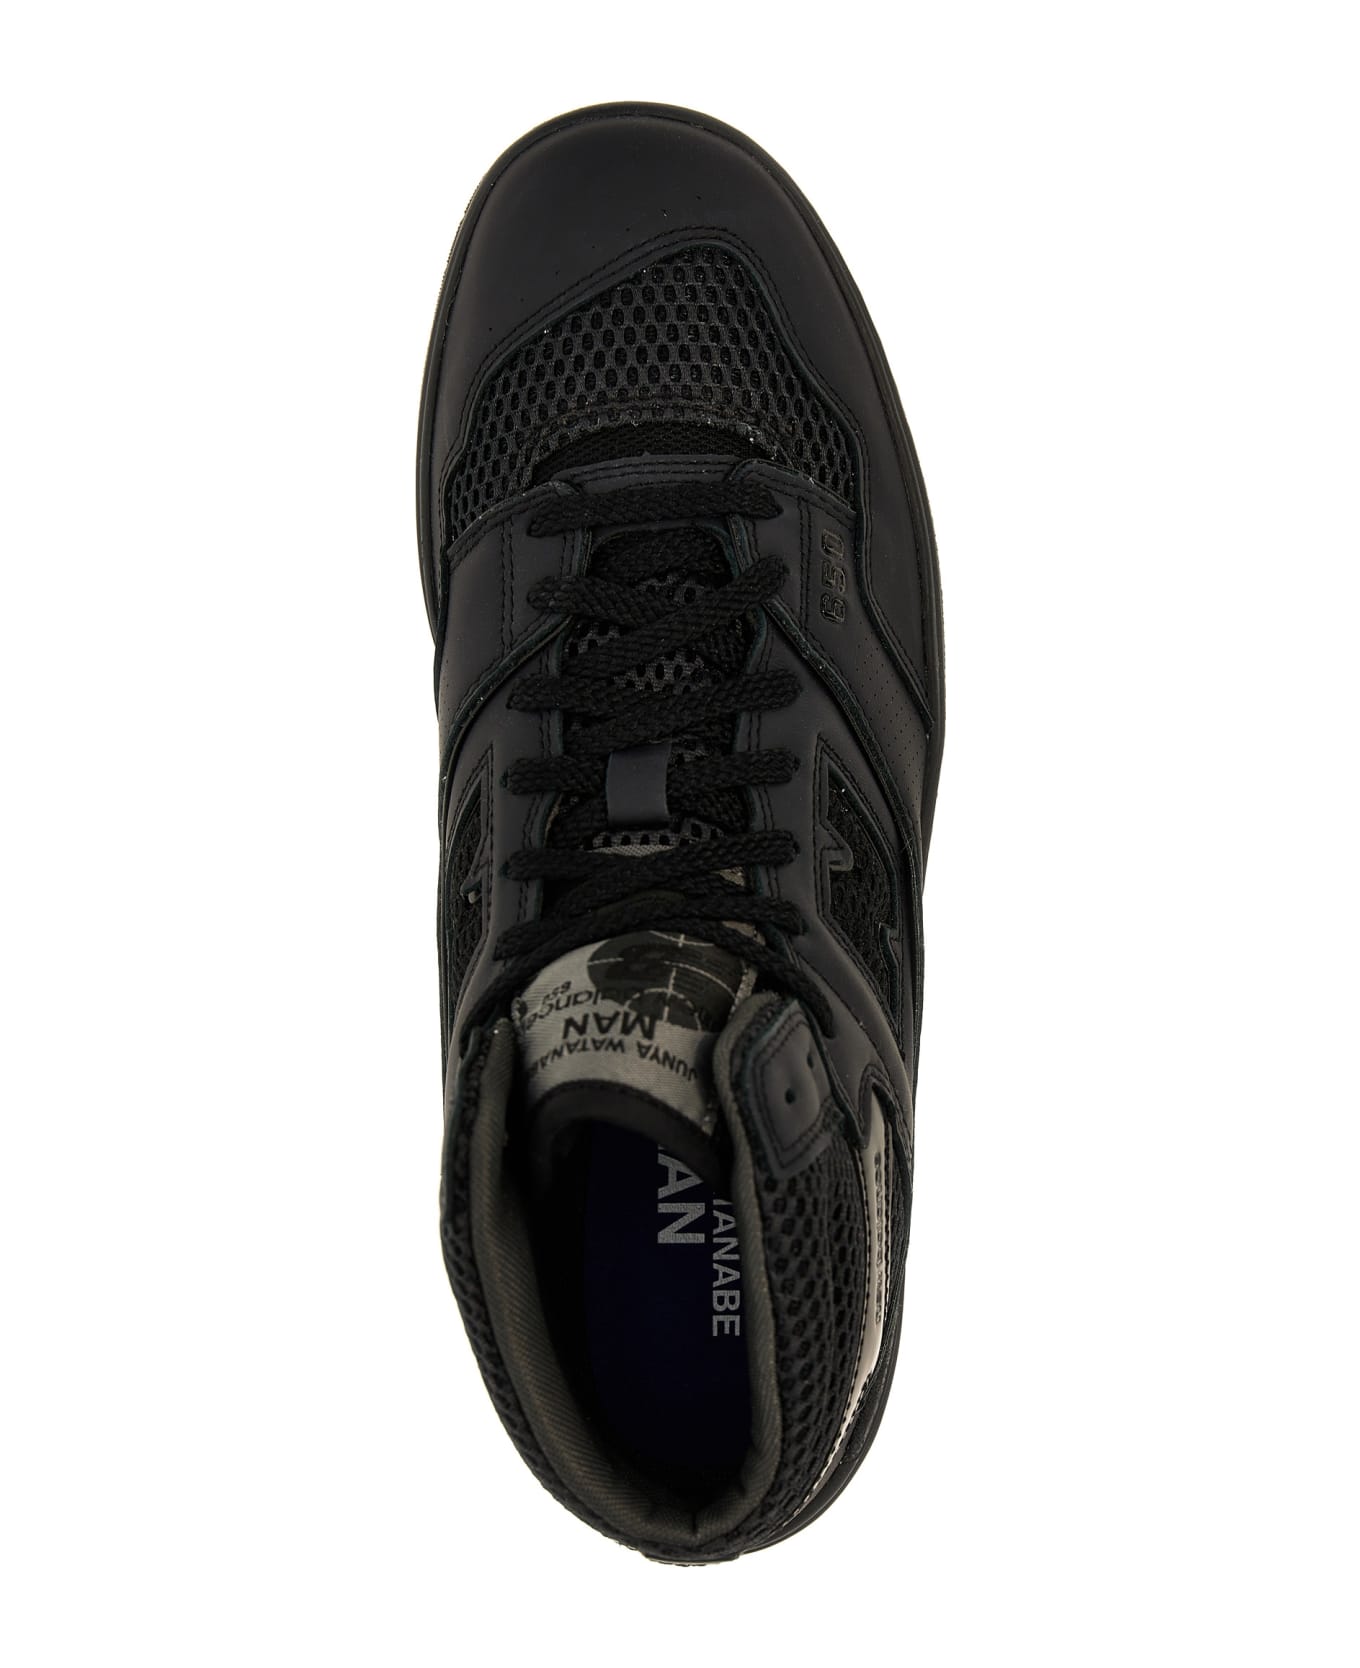 Junya Watanabe X New Balance '650' Sneakers - Black Black